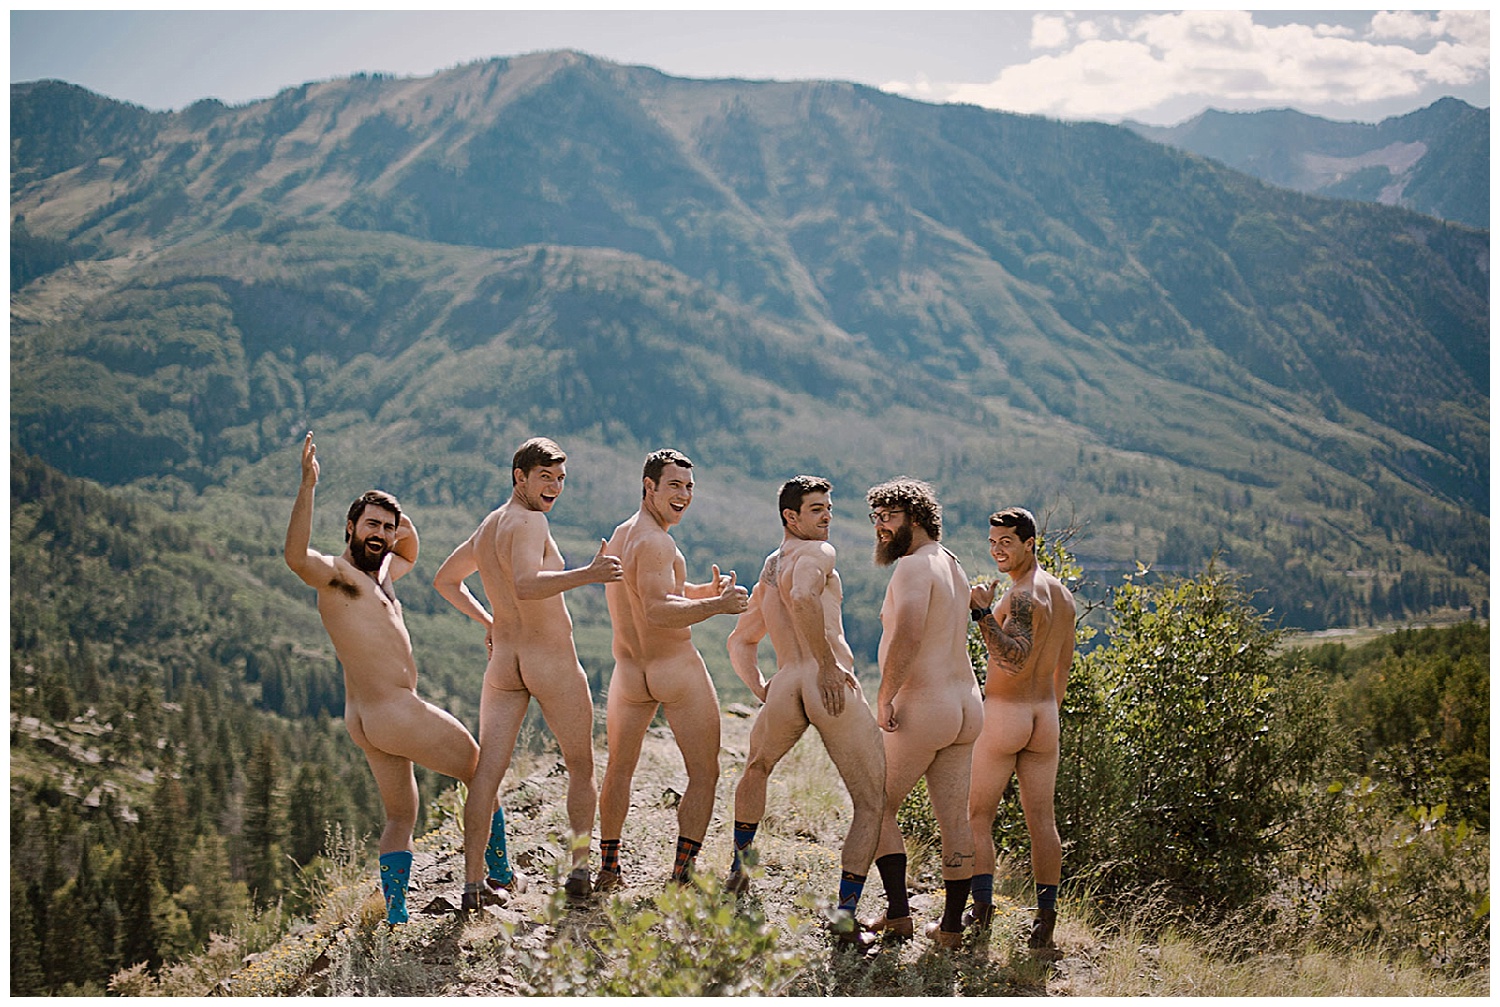 The Groomsmen nude photos